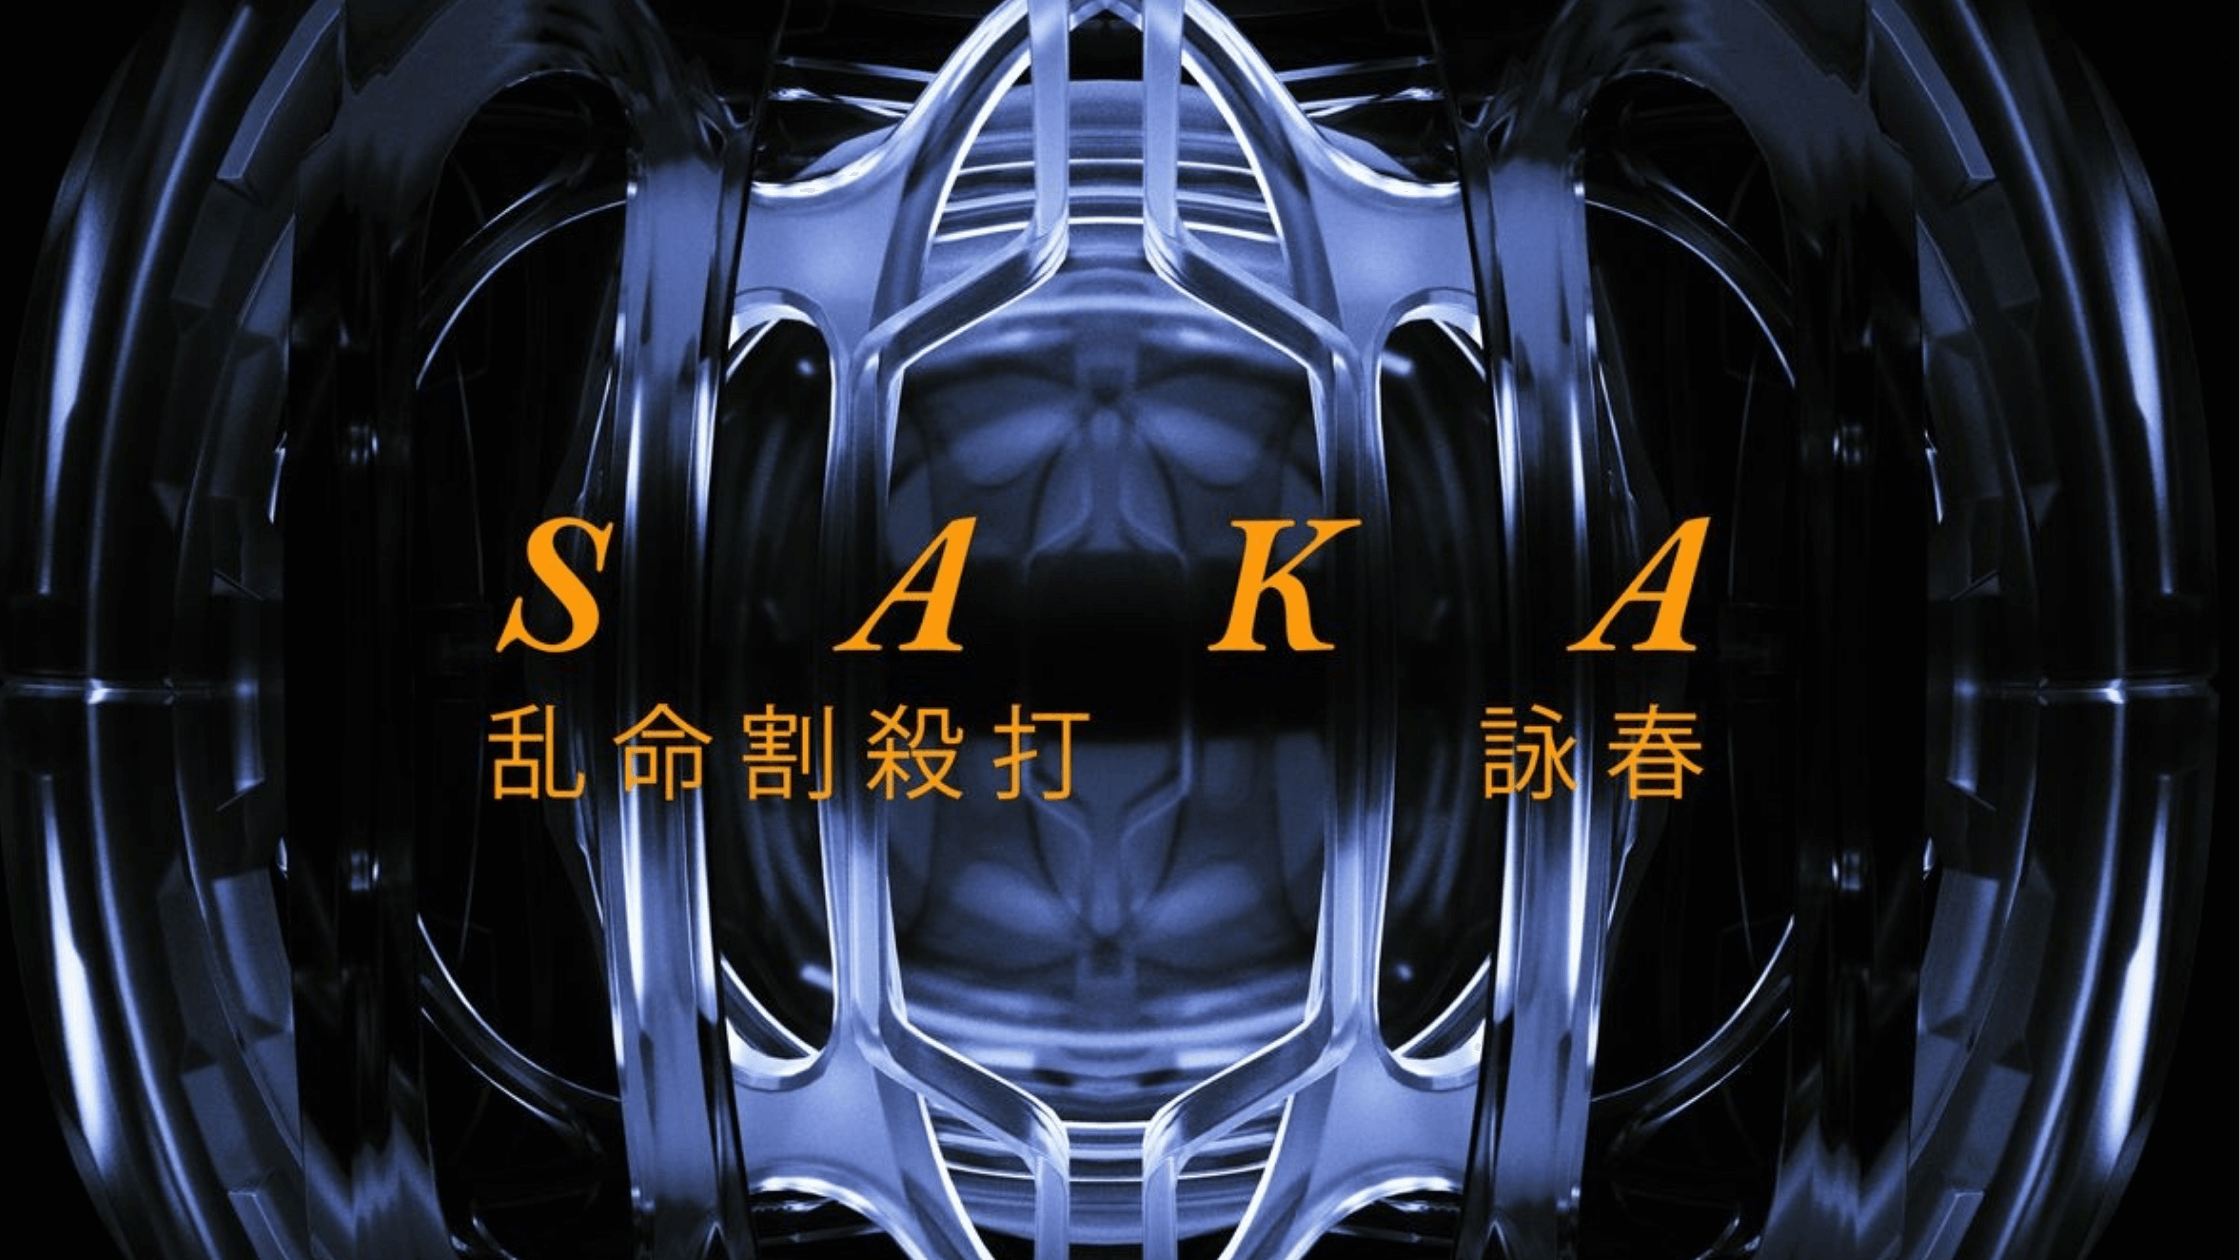 Saka Cranks the Heat on Latest Two-Track EP